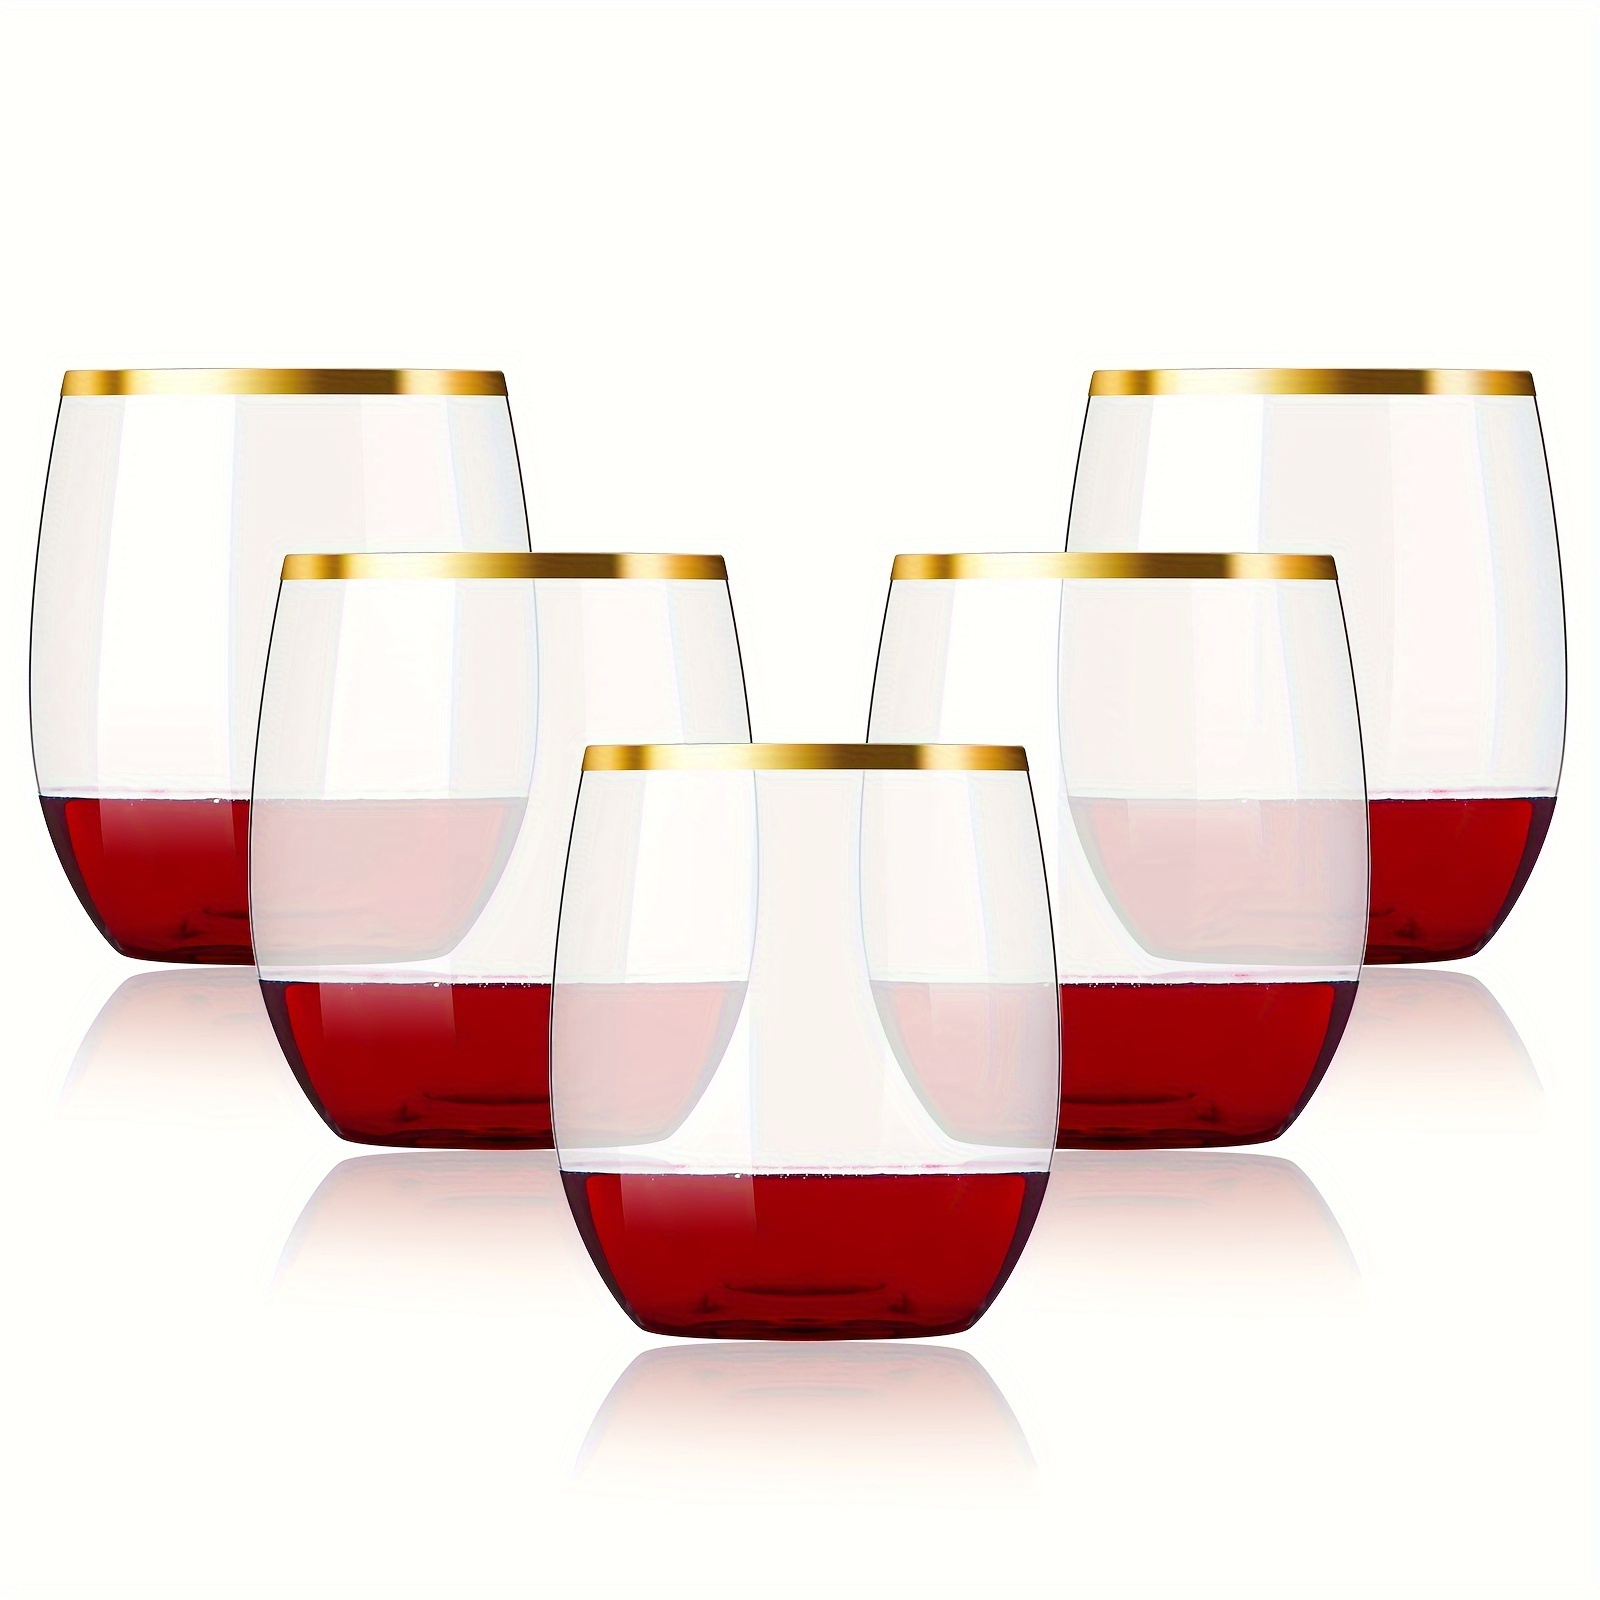 NETANY [ 8pcs Set ] Drinking Glasses with Glass Straw